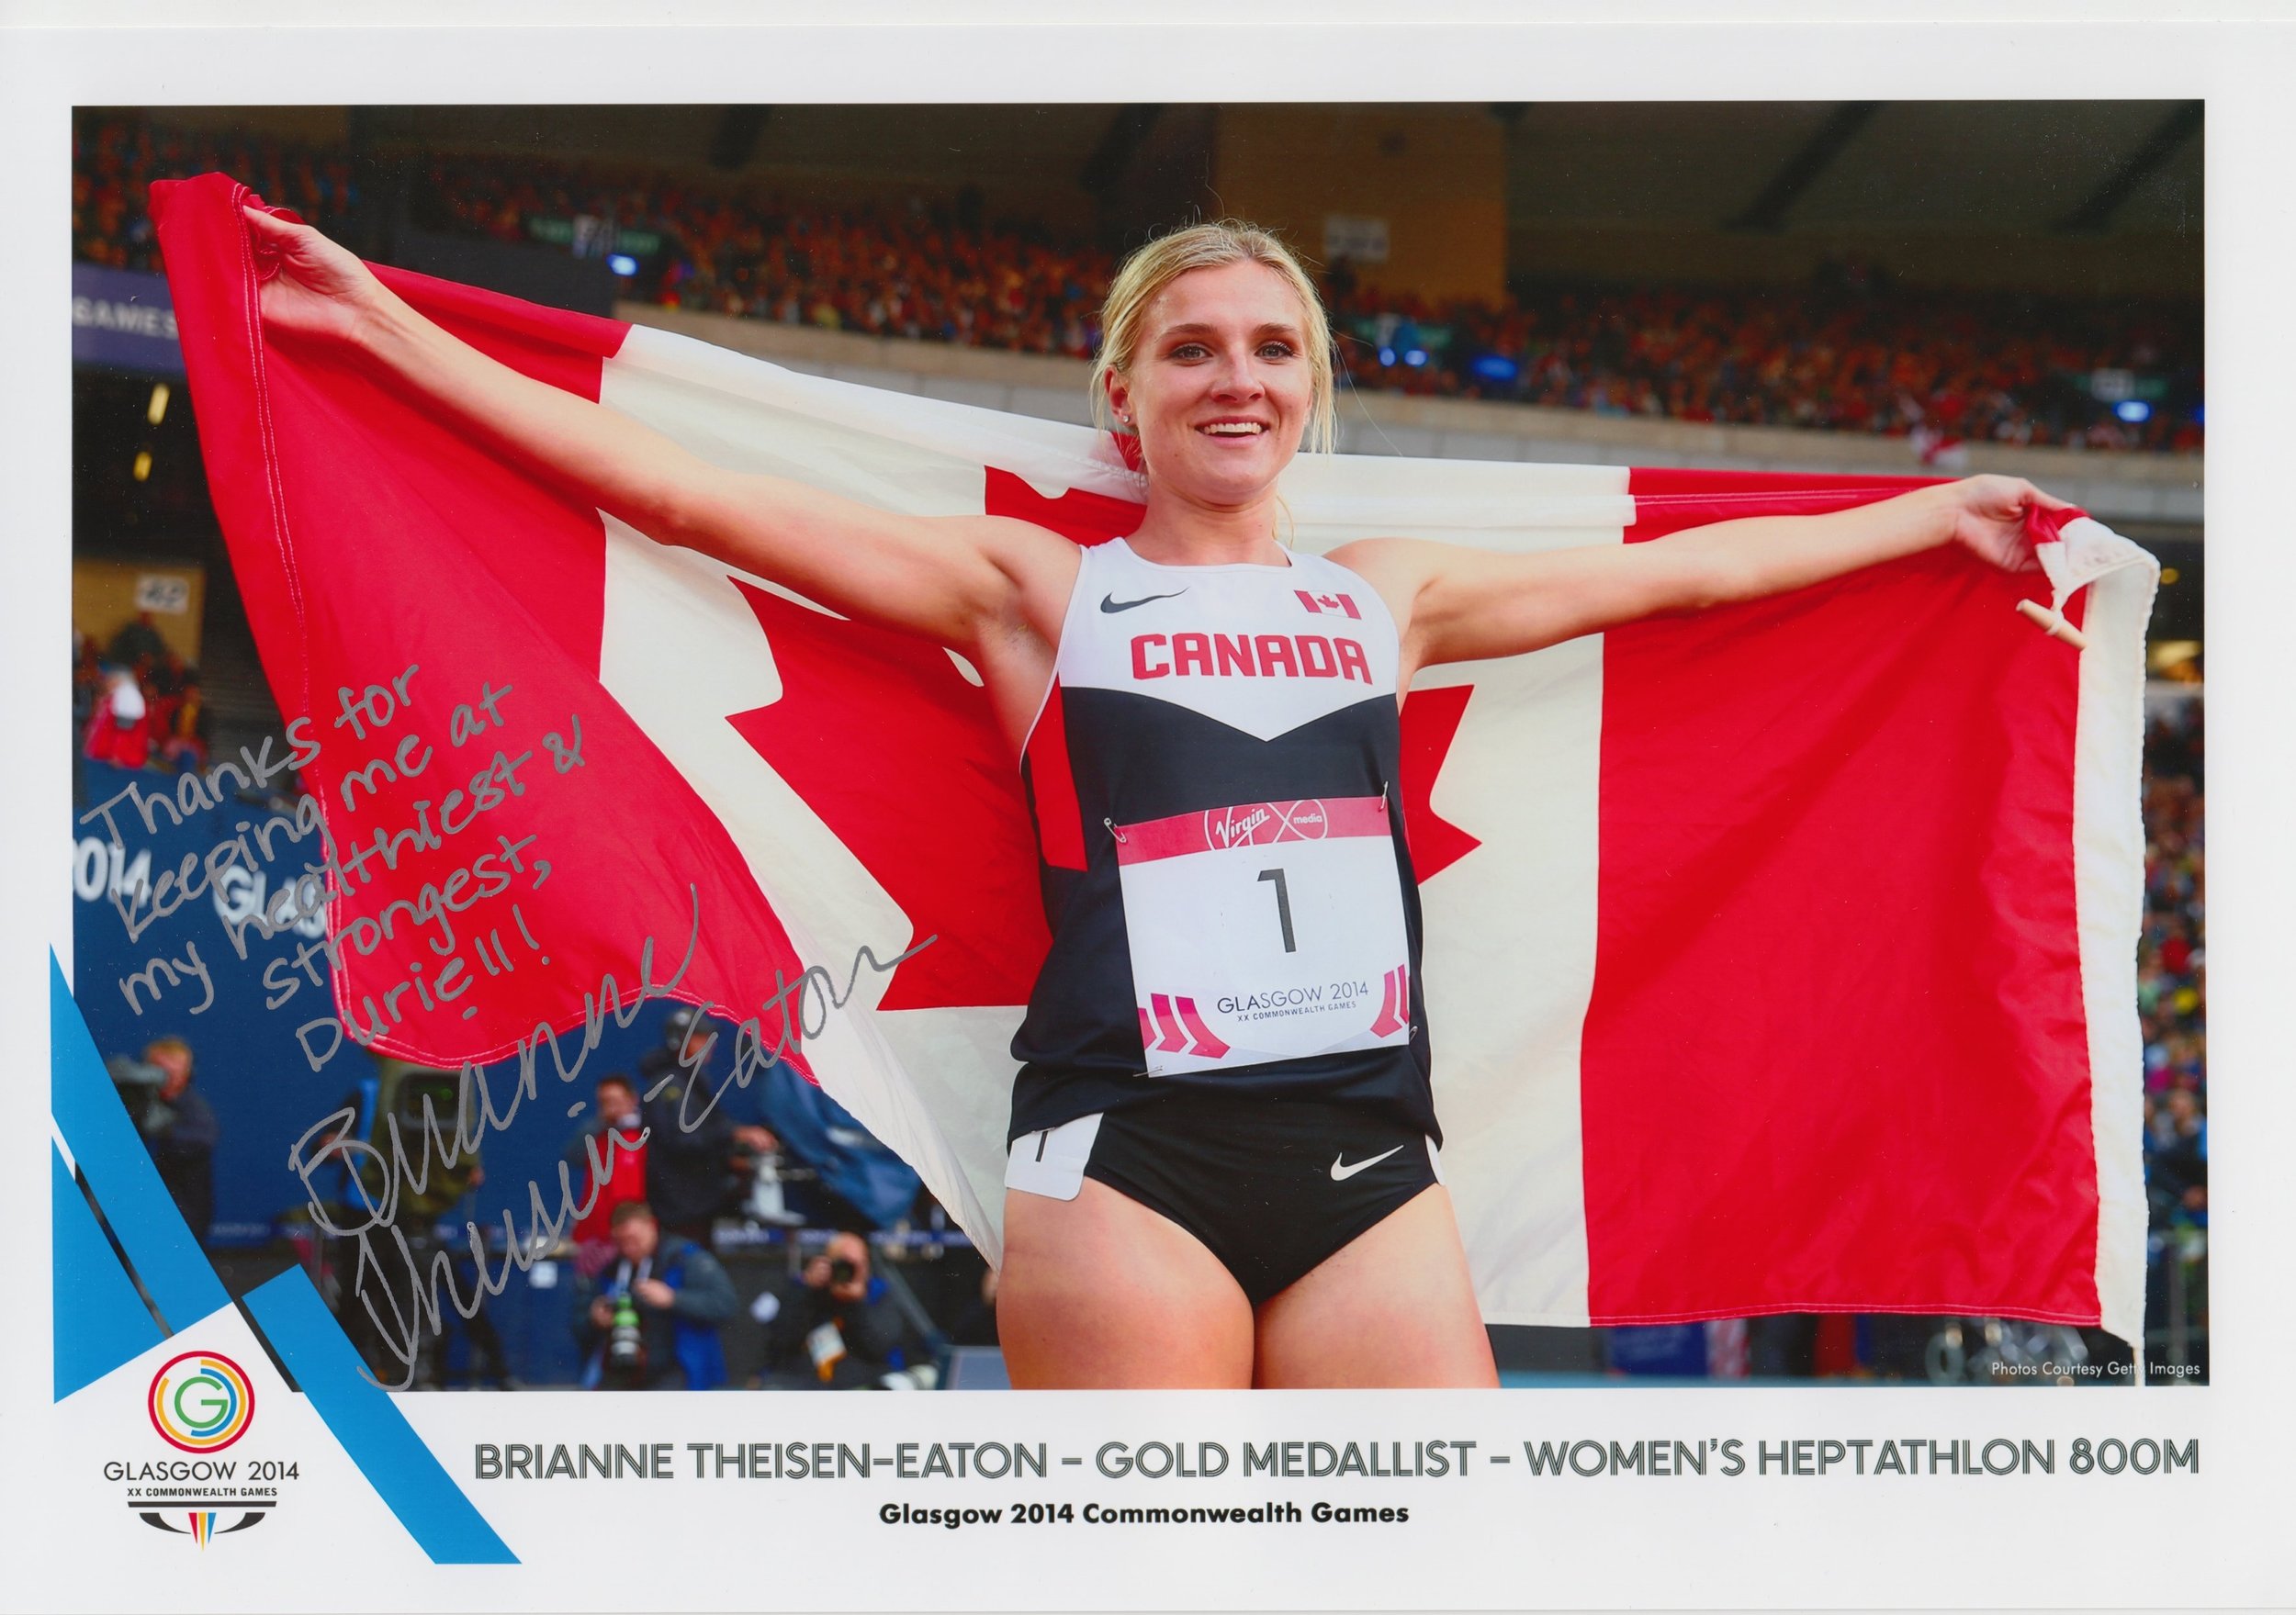 Brianne Theisen-Eaton - 2016 Olympic Bronze Medalist